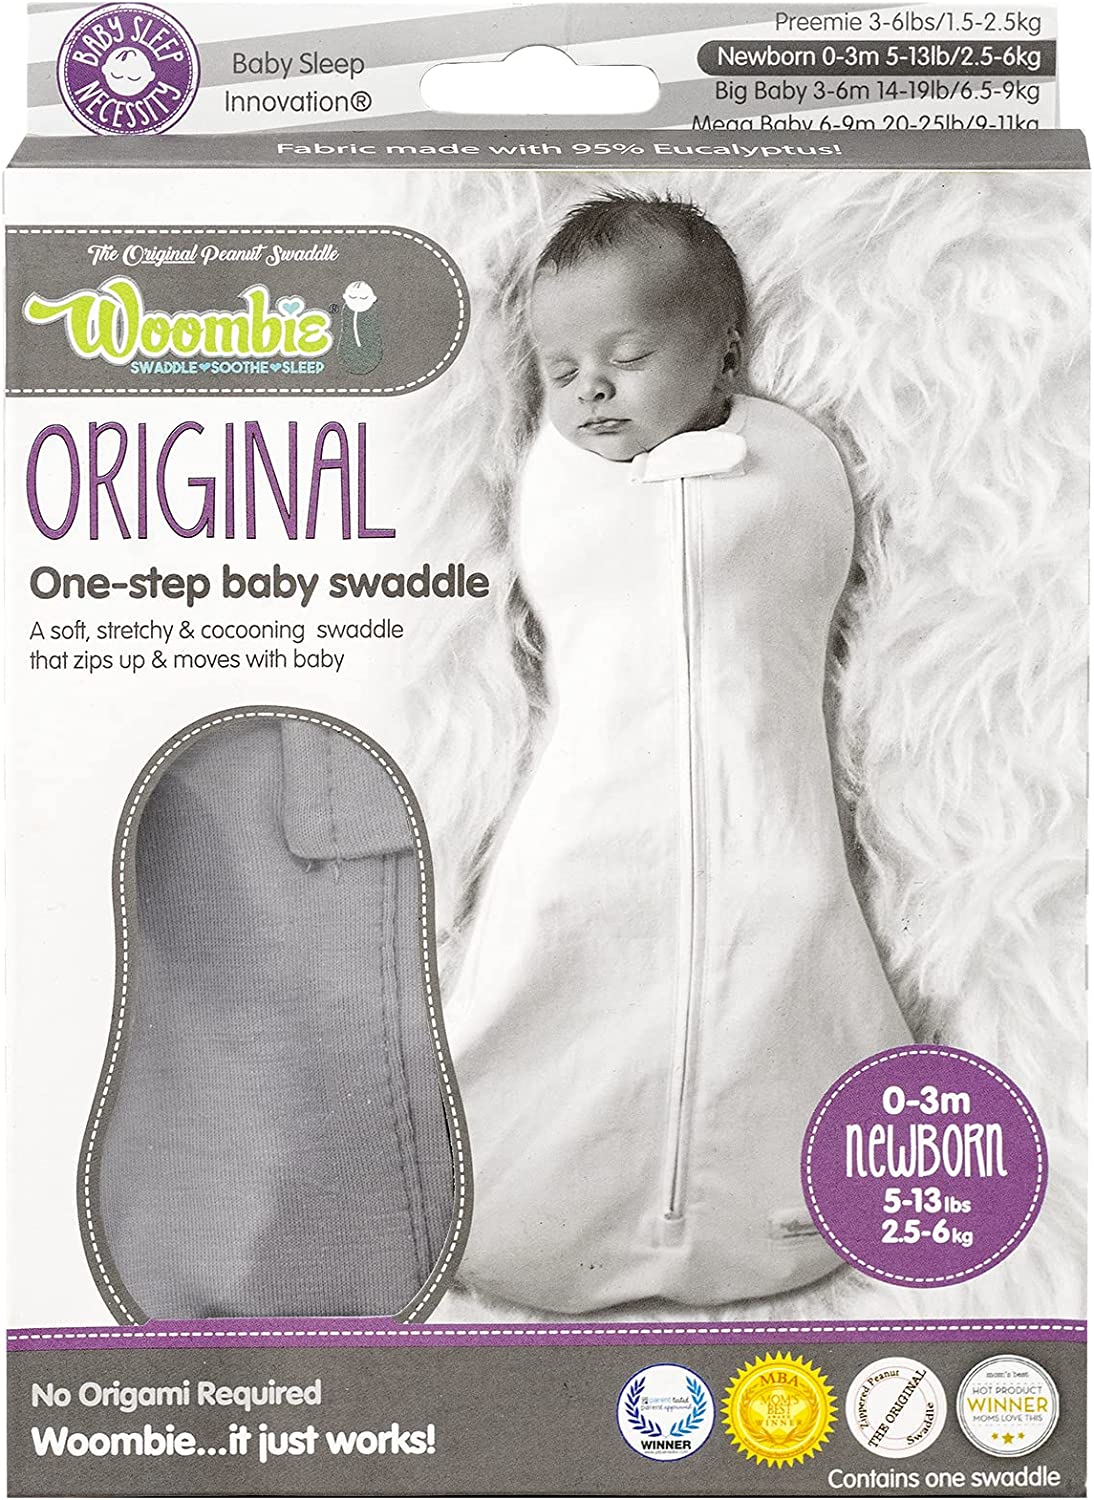 The Tencel Woombie Baby Swaddling Wrap - Dreamy Gray